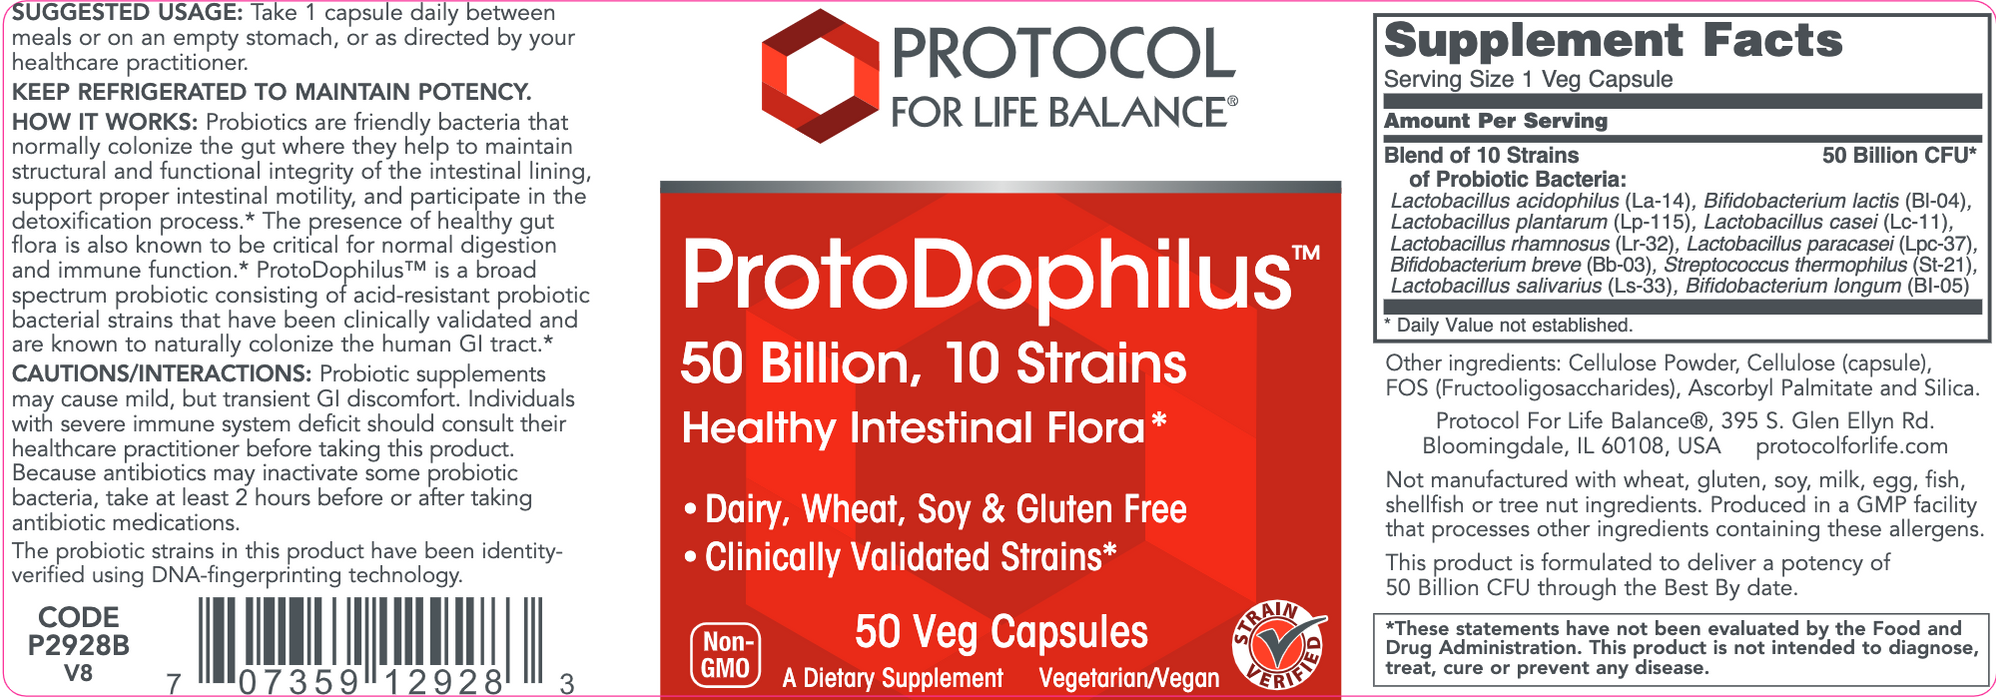 Protodophilus-Vitamins & Supplements-Protocol For Life Balance-25 Billion - 50 Capsules-Pine Street Clinic